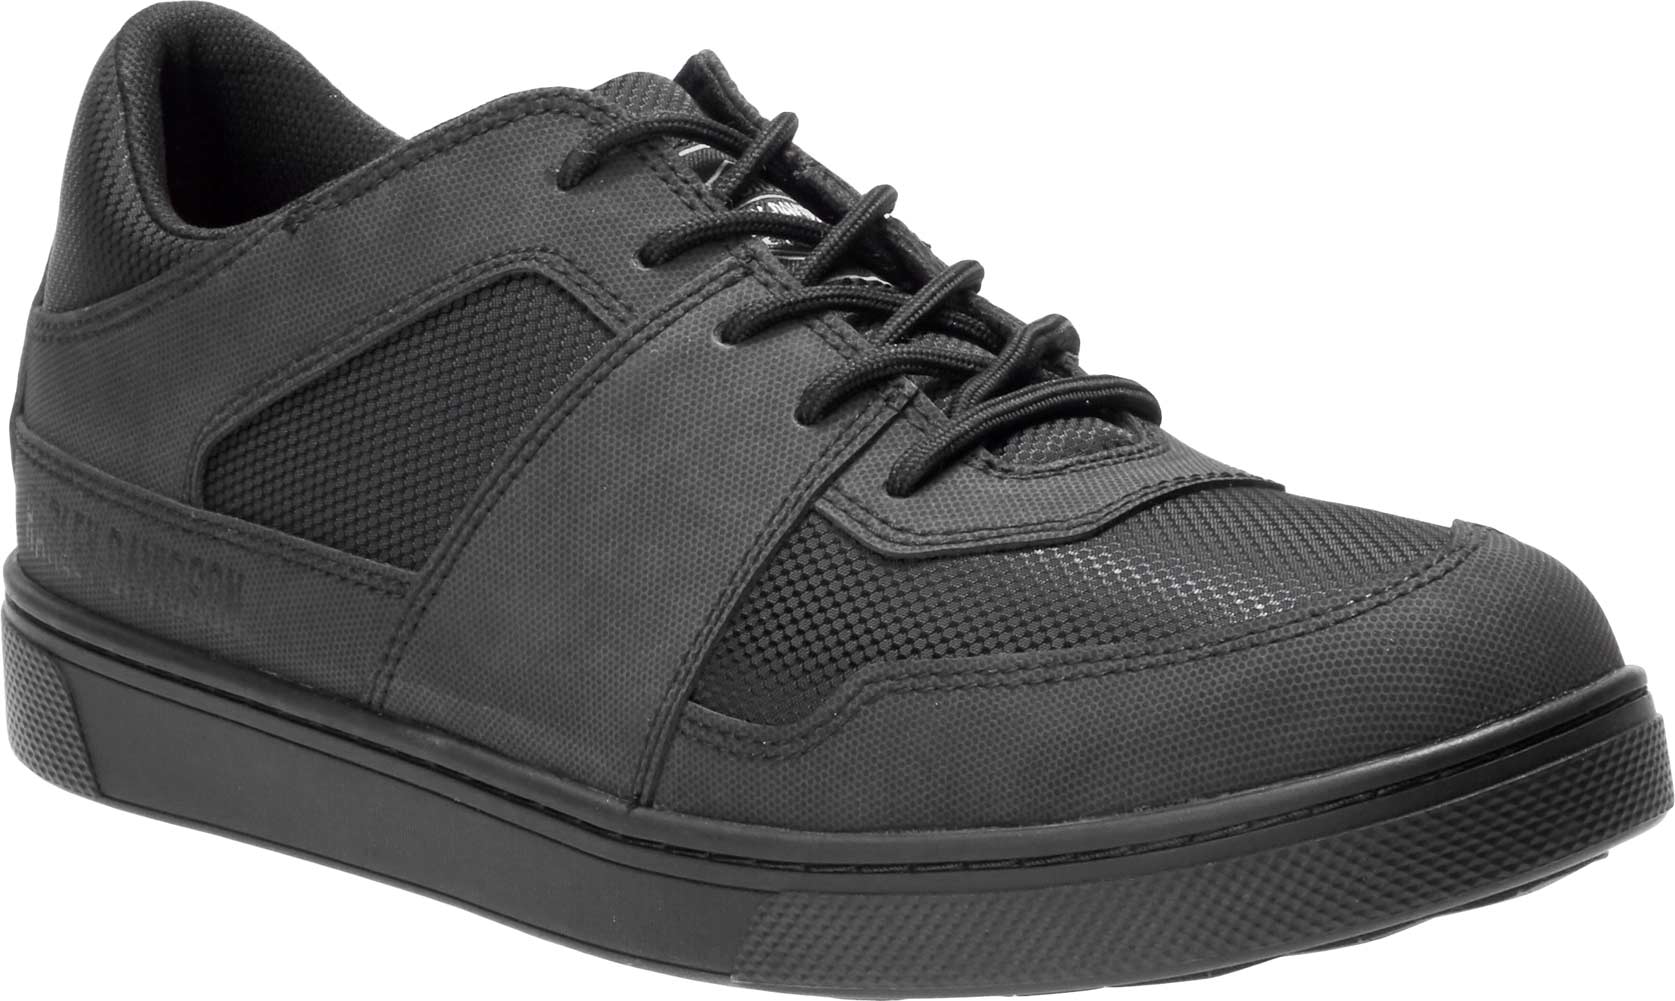 mens black leather tennis shoes